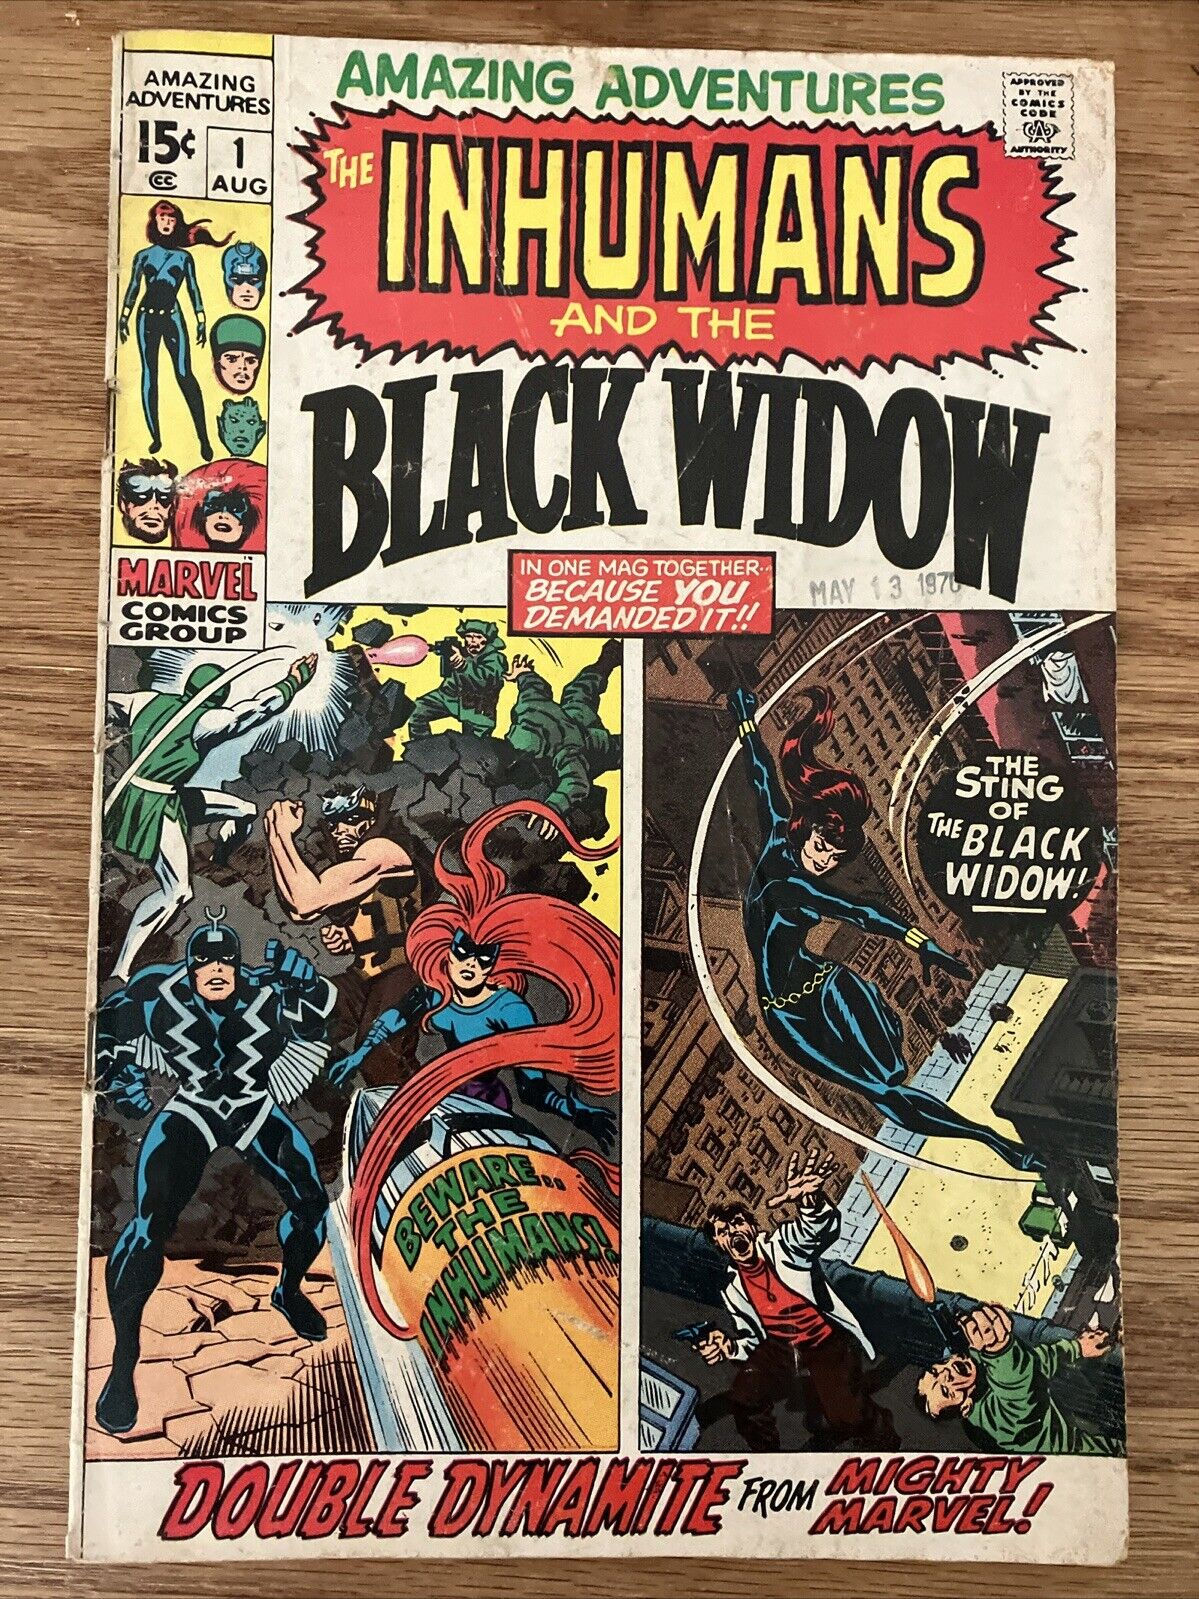 AMAZING ADVENTURES #1 - THE INHUMANS AND THE BLACK WIDOW MARVEL COMICS 1970